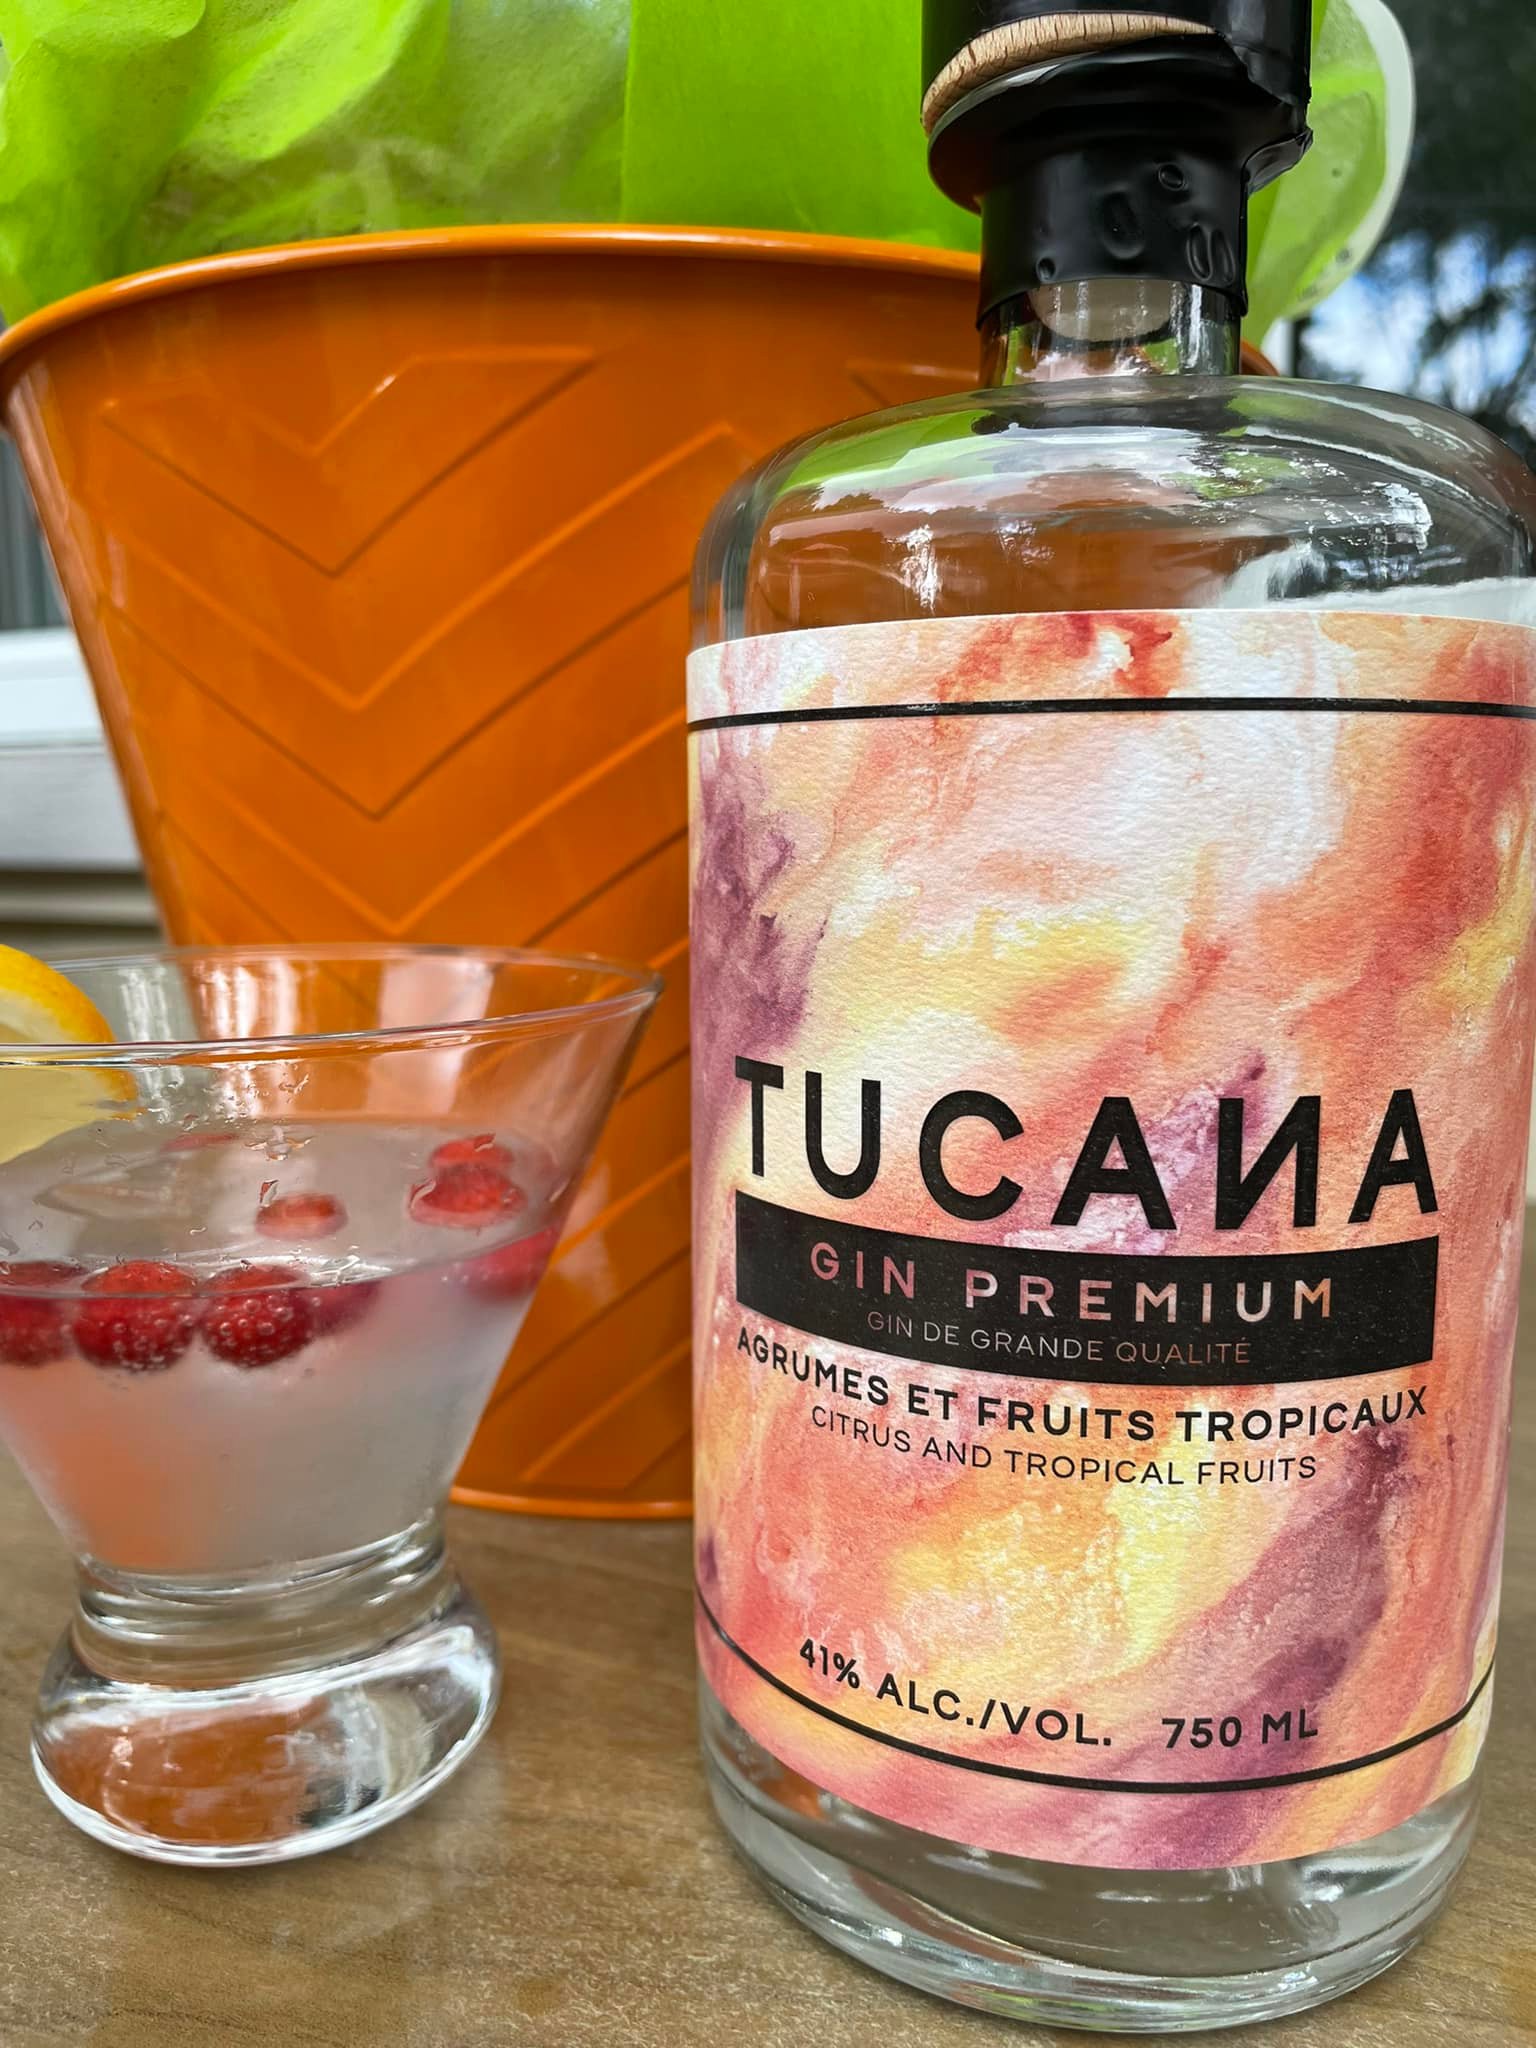 Tucana Citrus & Tropical Fruits